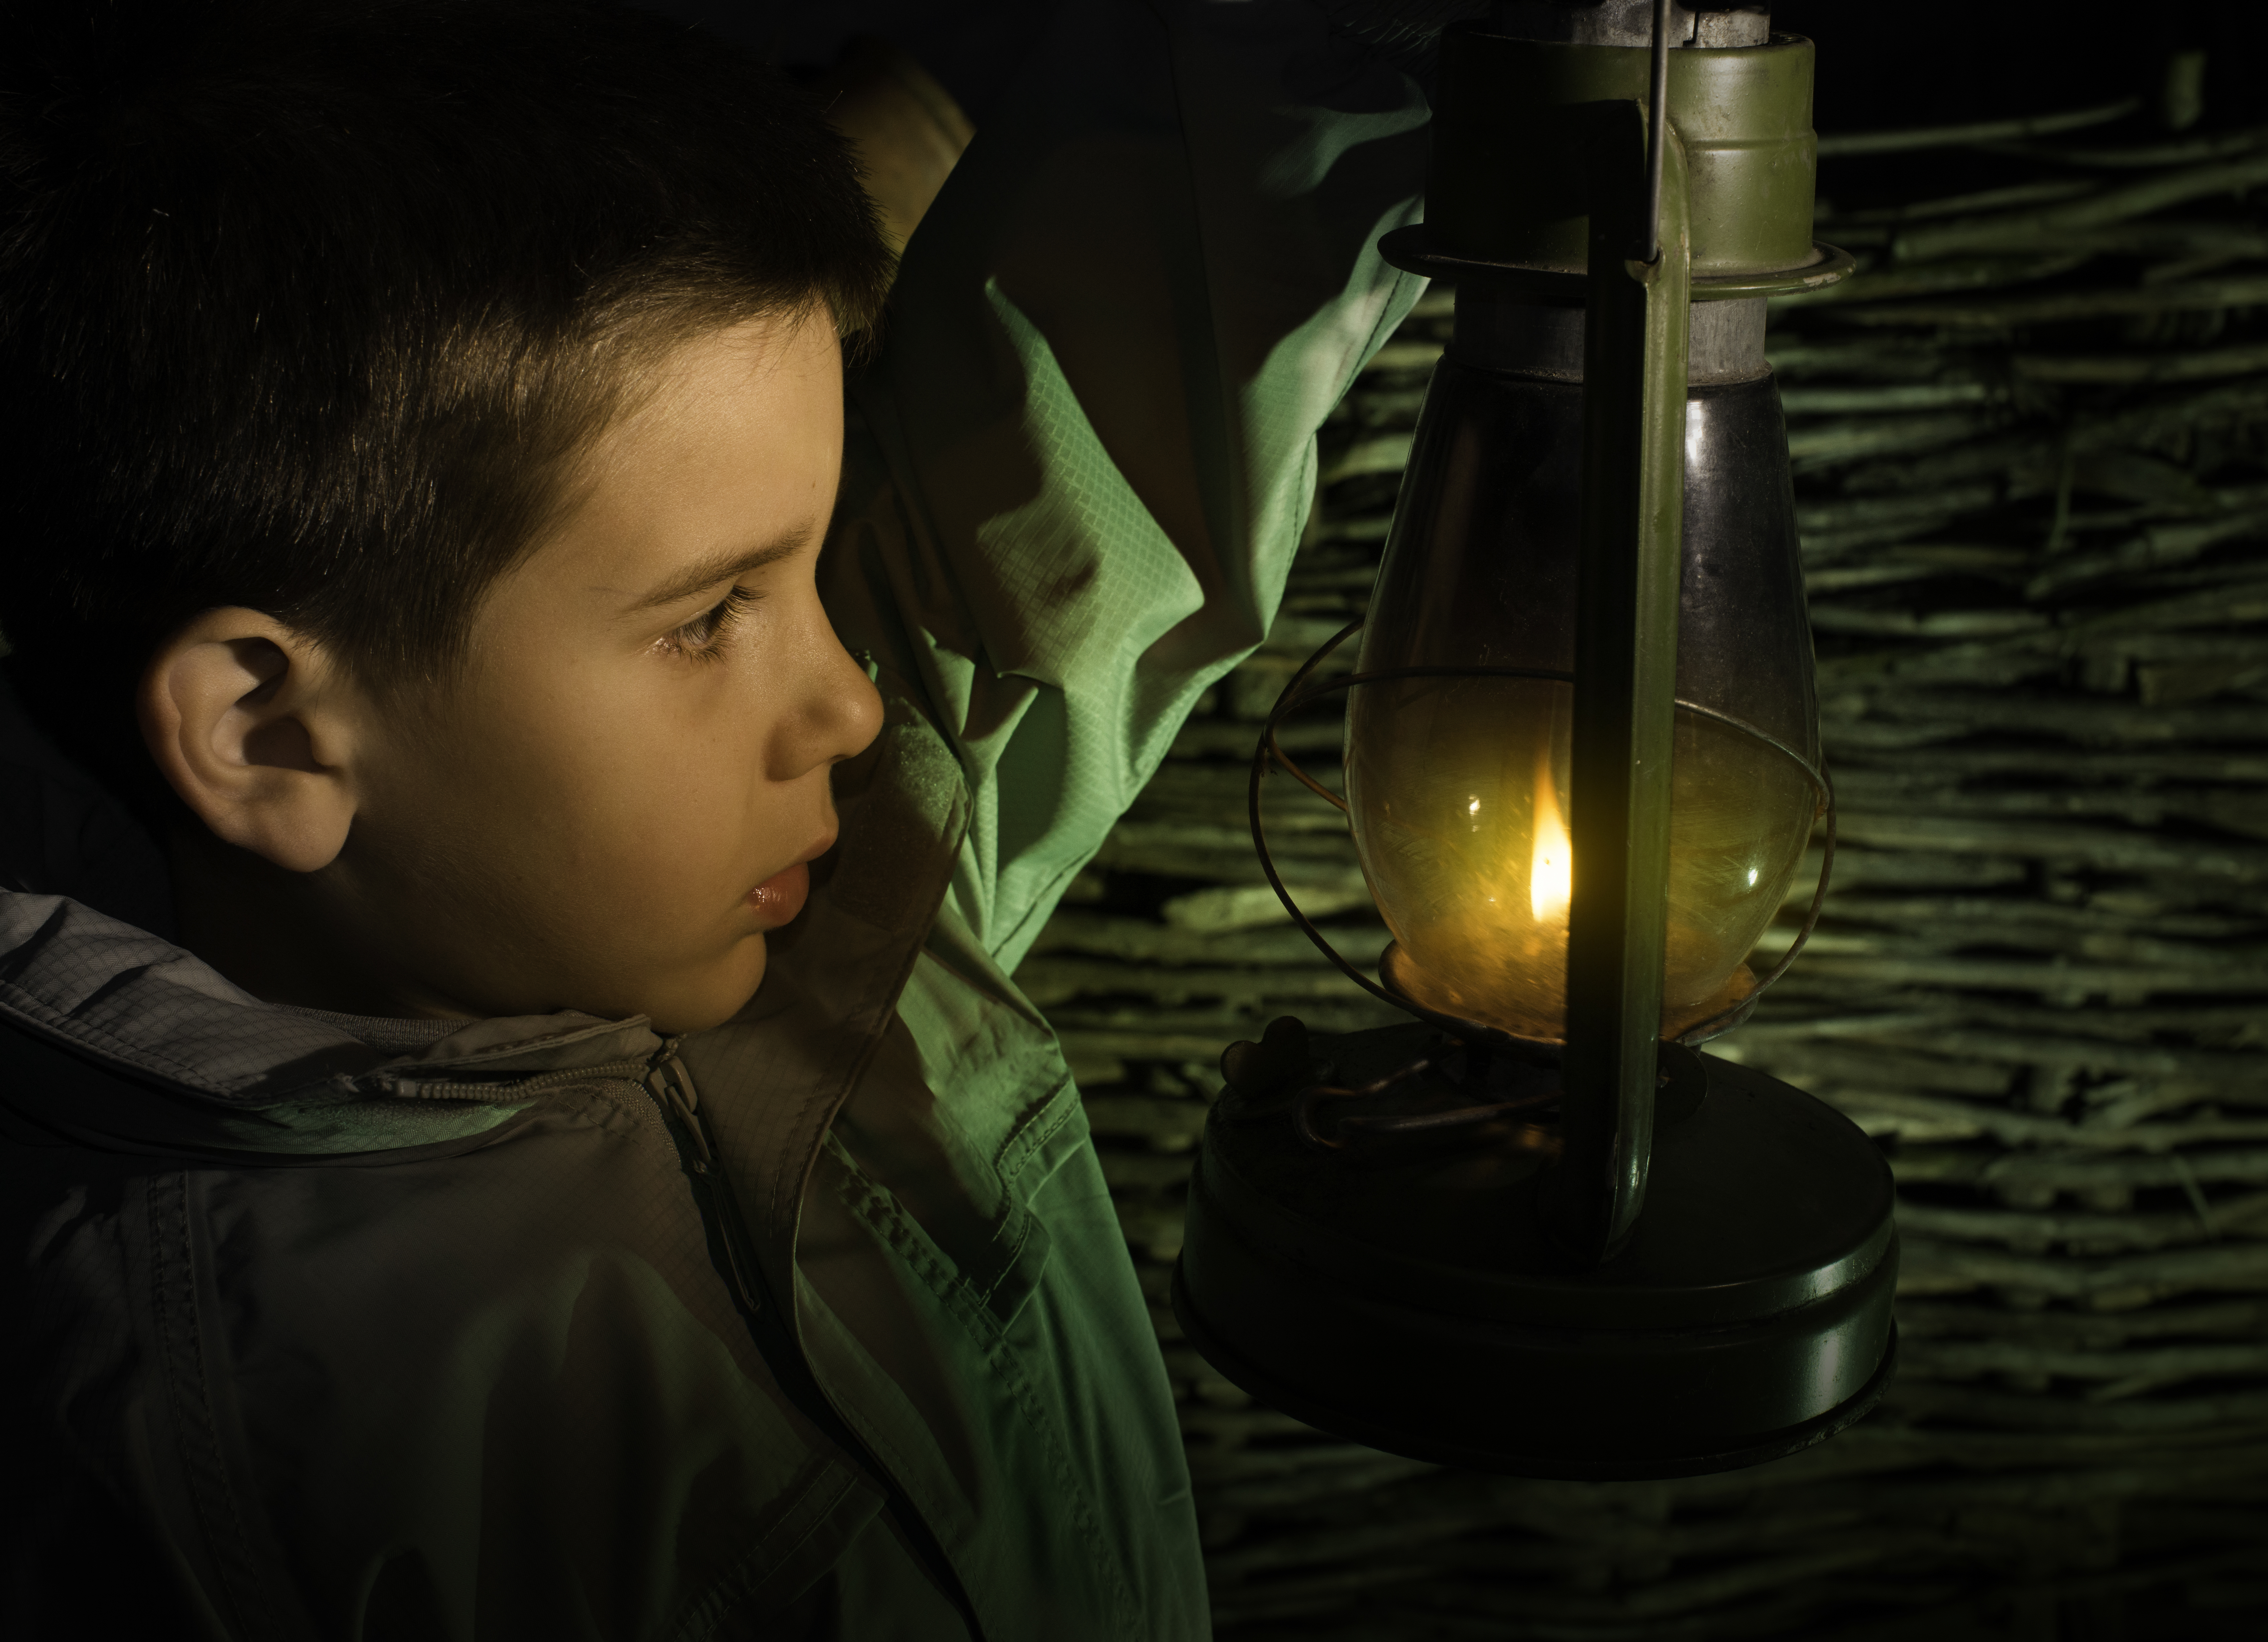 Child walk in the darkness with gas lantern | Source: Shutterstock.com